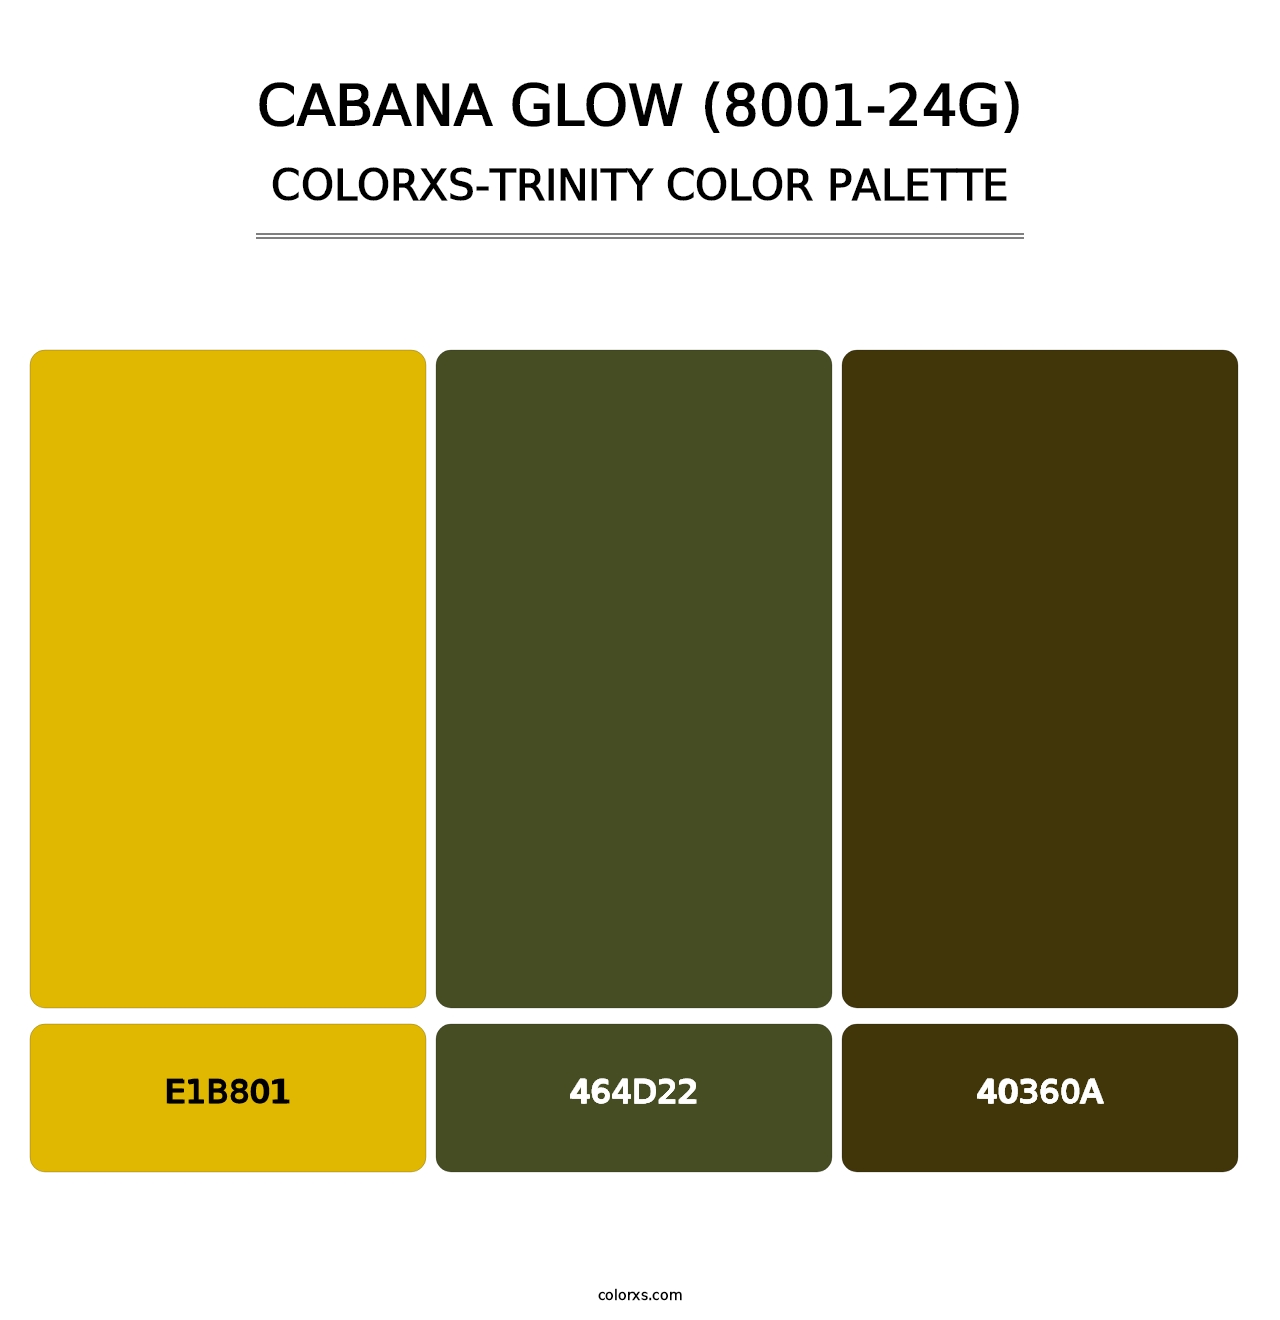 Cabana Glow (8001-24G) - Colorxs Trinity Palette